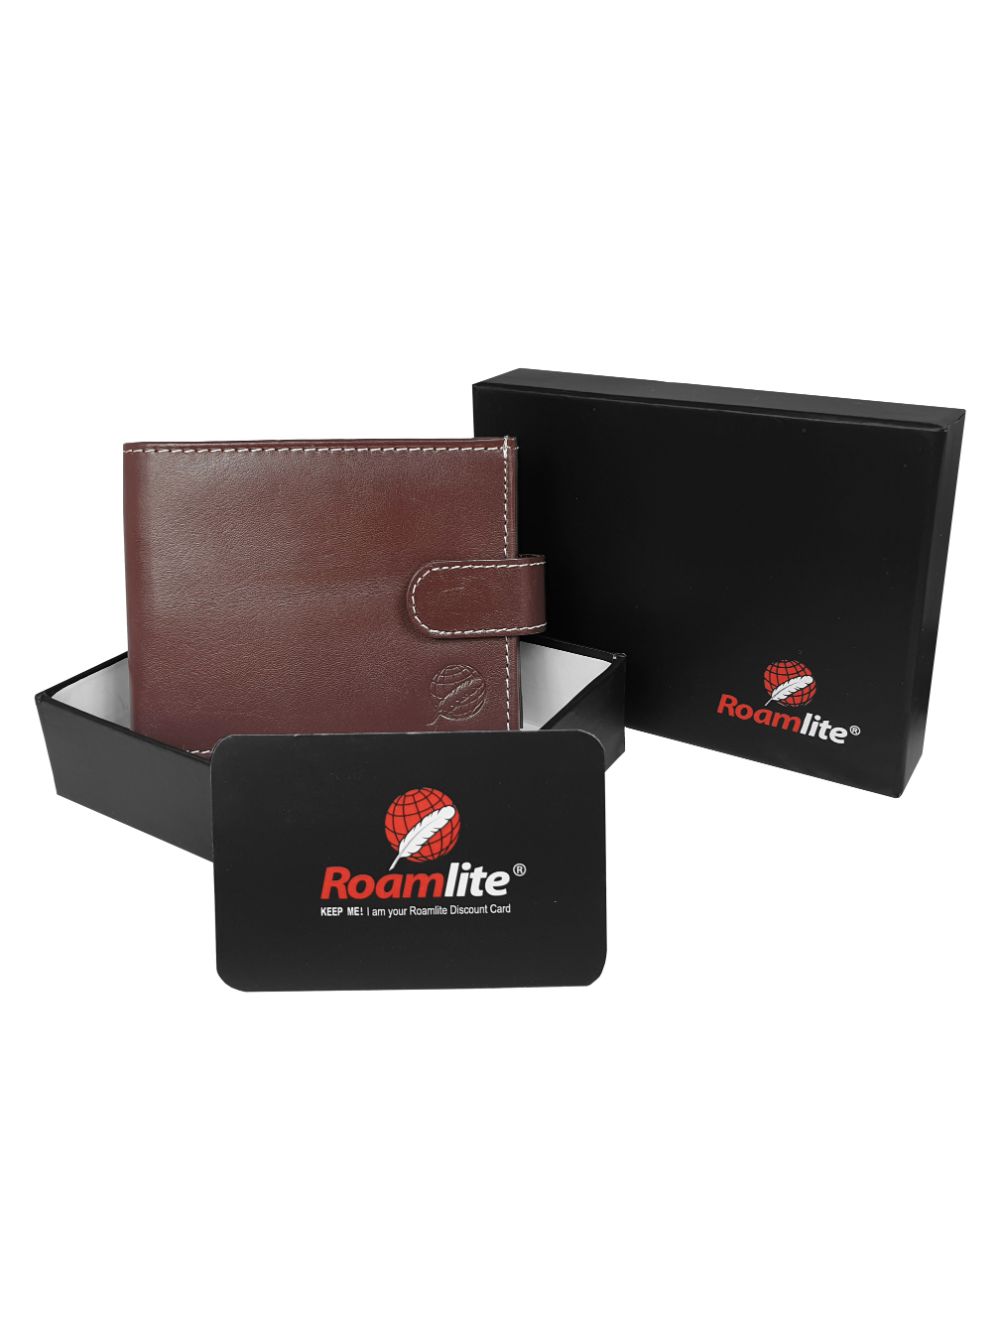 Roamlite Mens Wallet Light Brown Leather RL507front boxed